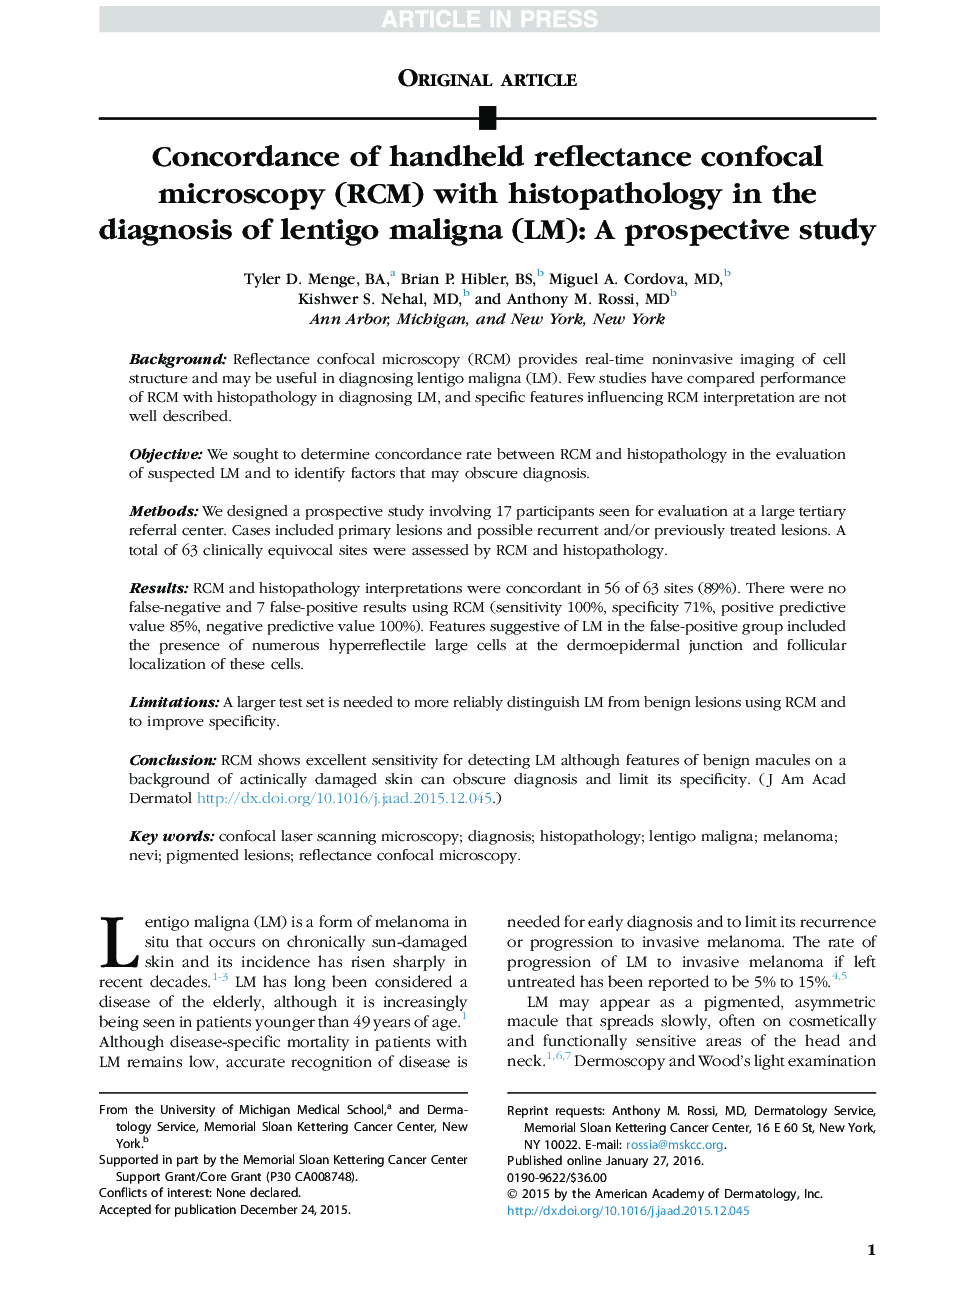 Concordance of handheld reflectance confocal microscopy (RCM) with histopathology in the diagnosis of lentigo maligna (LM): A prospective study